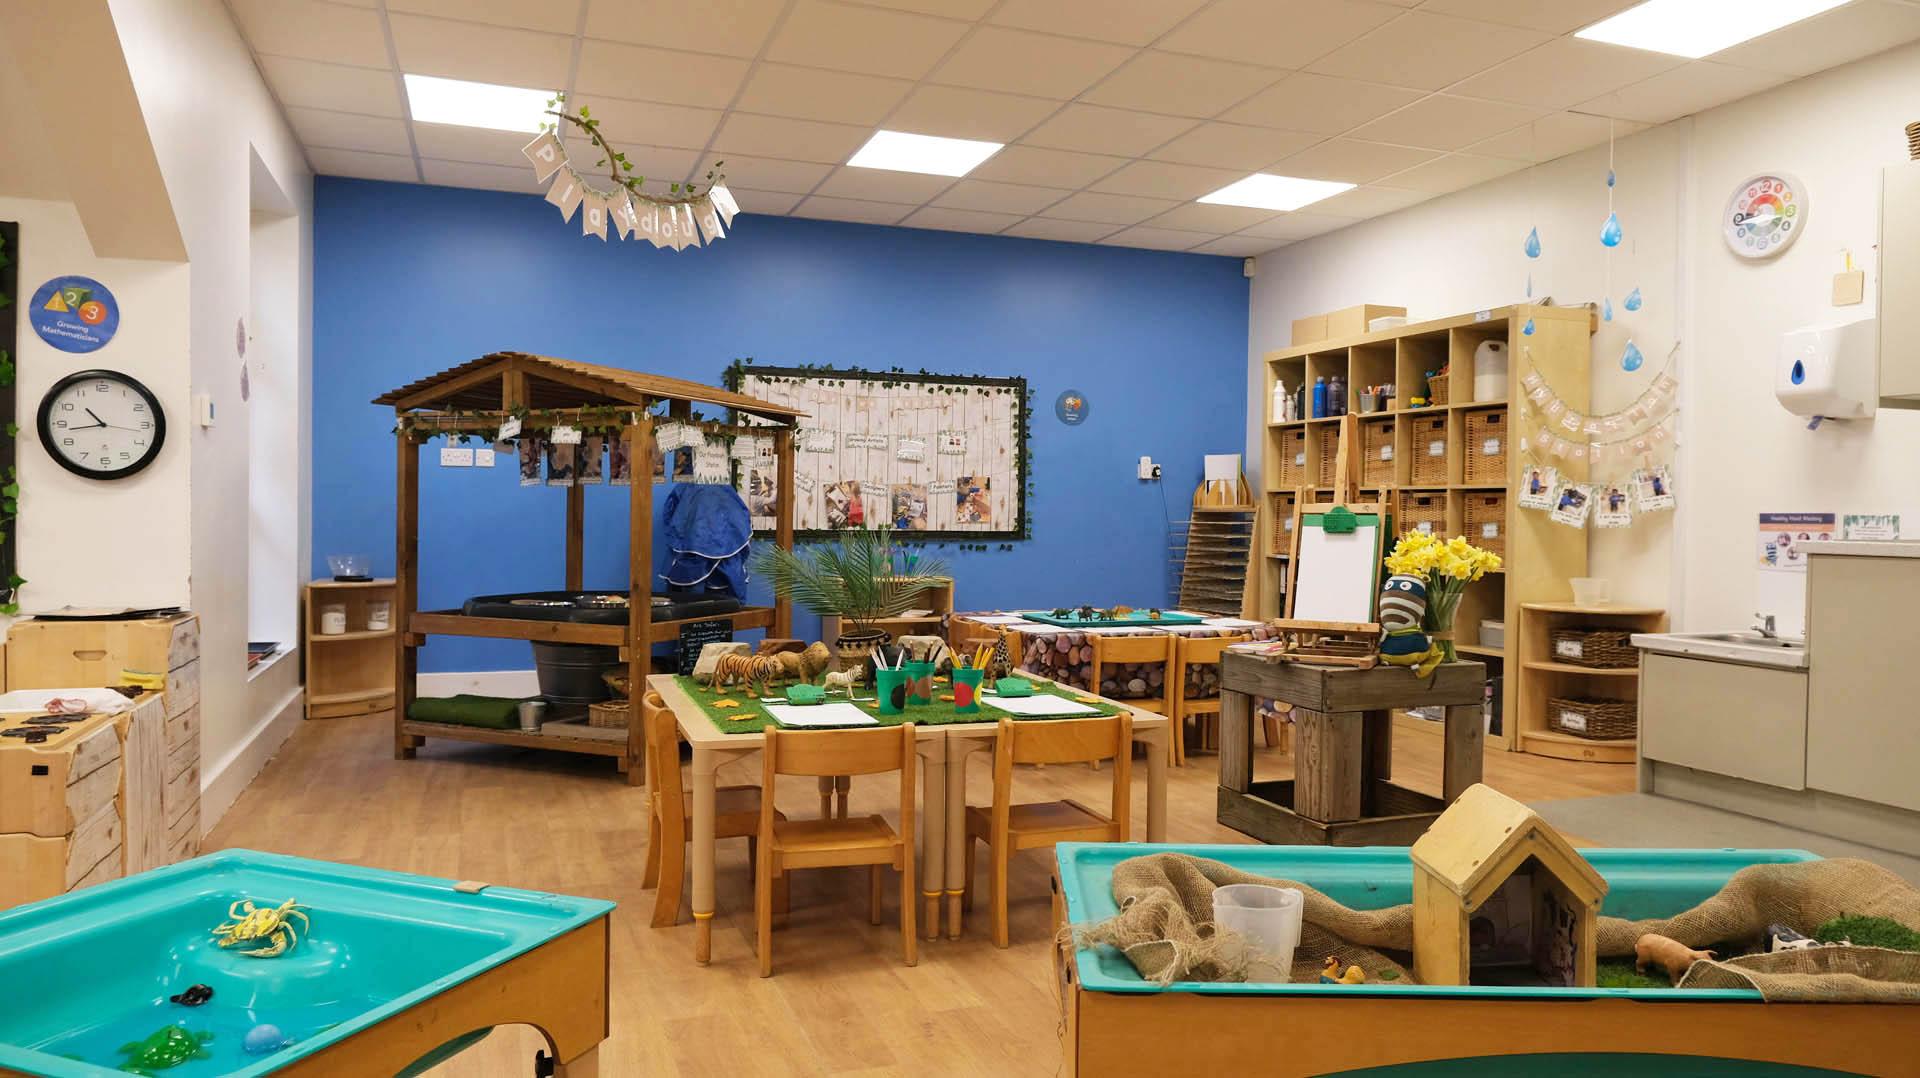 Rugby Day Nursery and Preschool preschool room